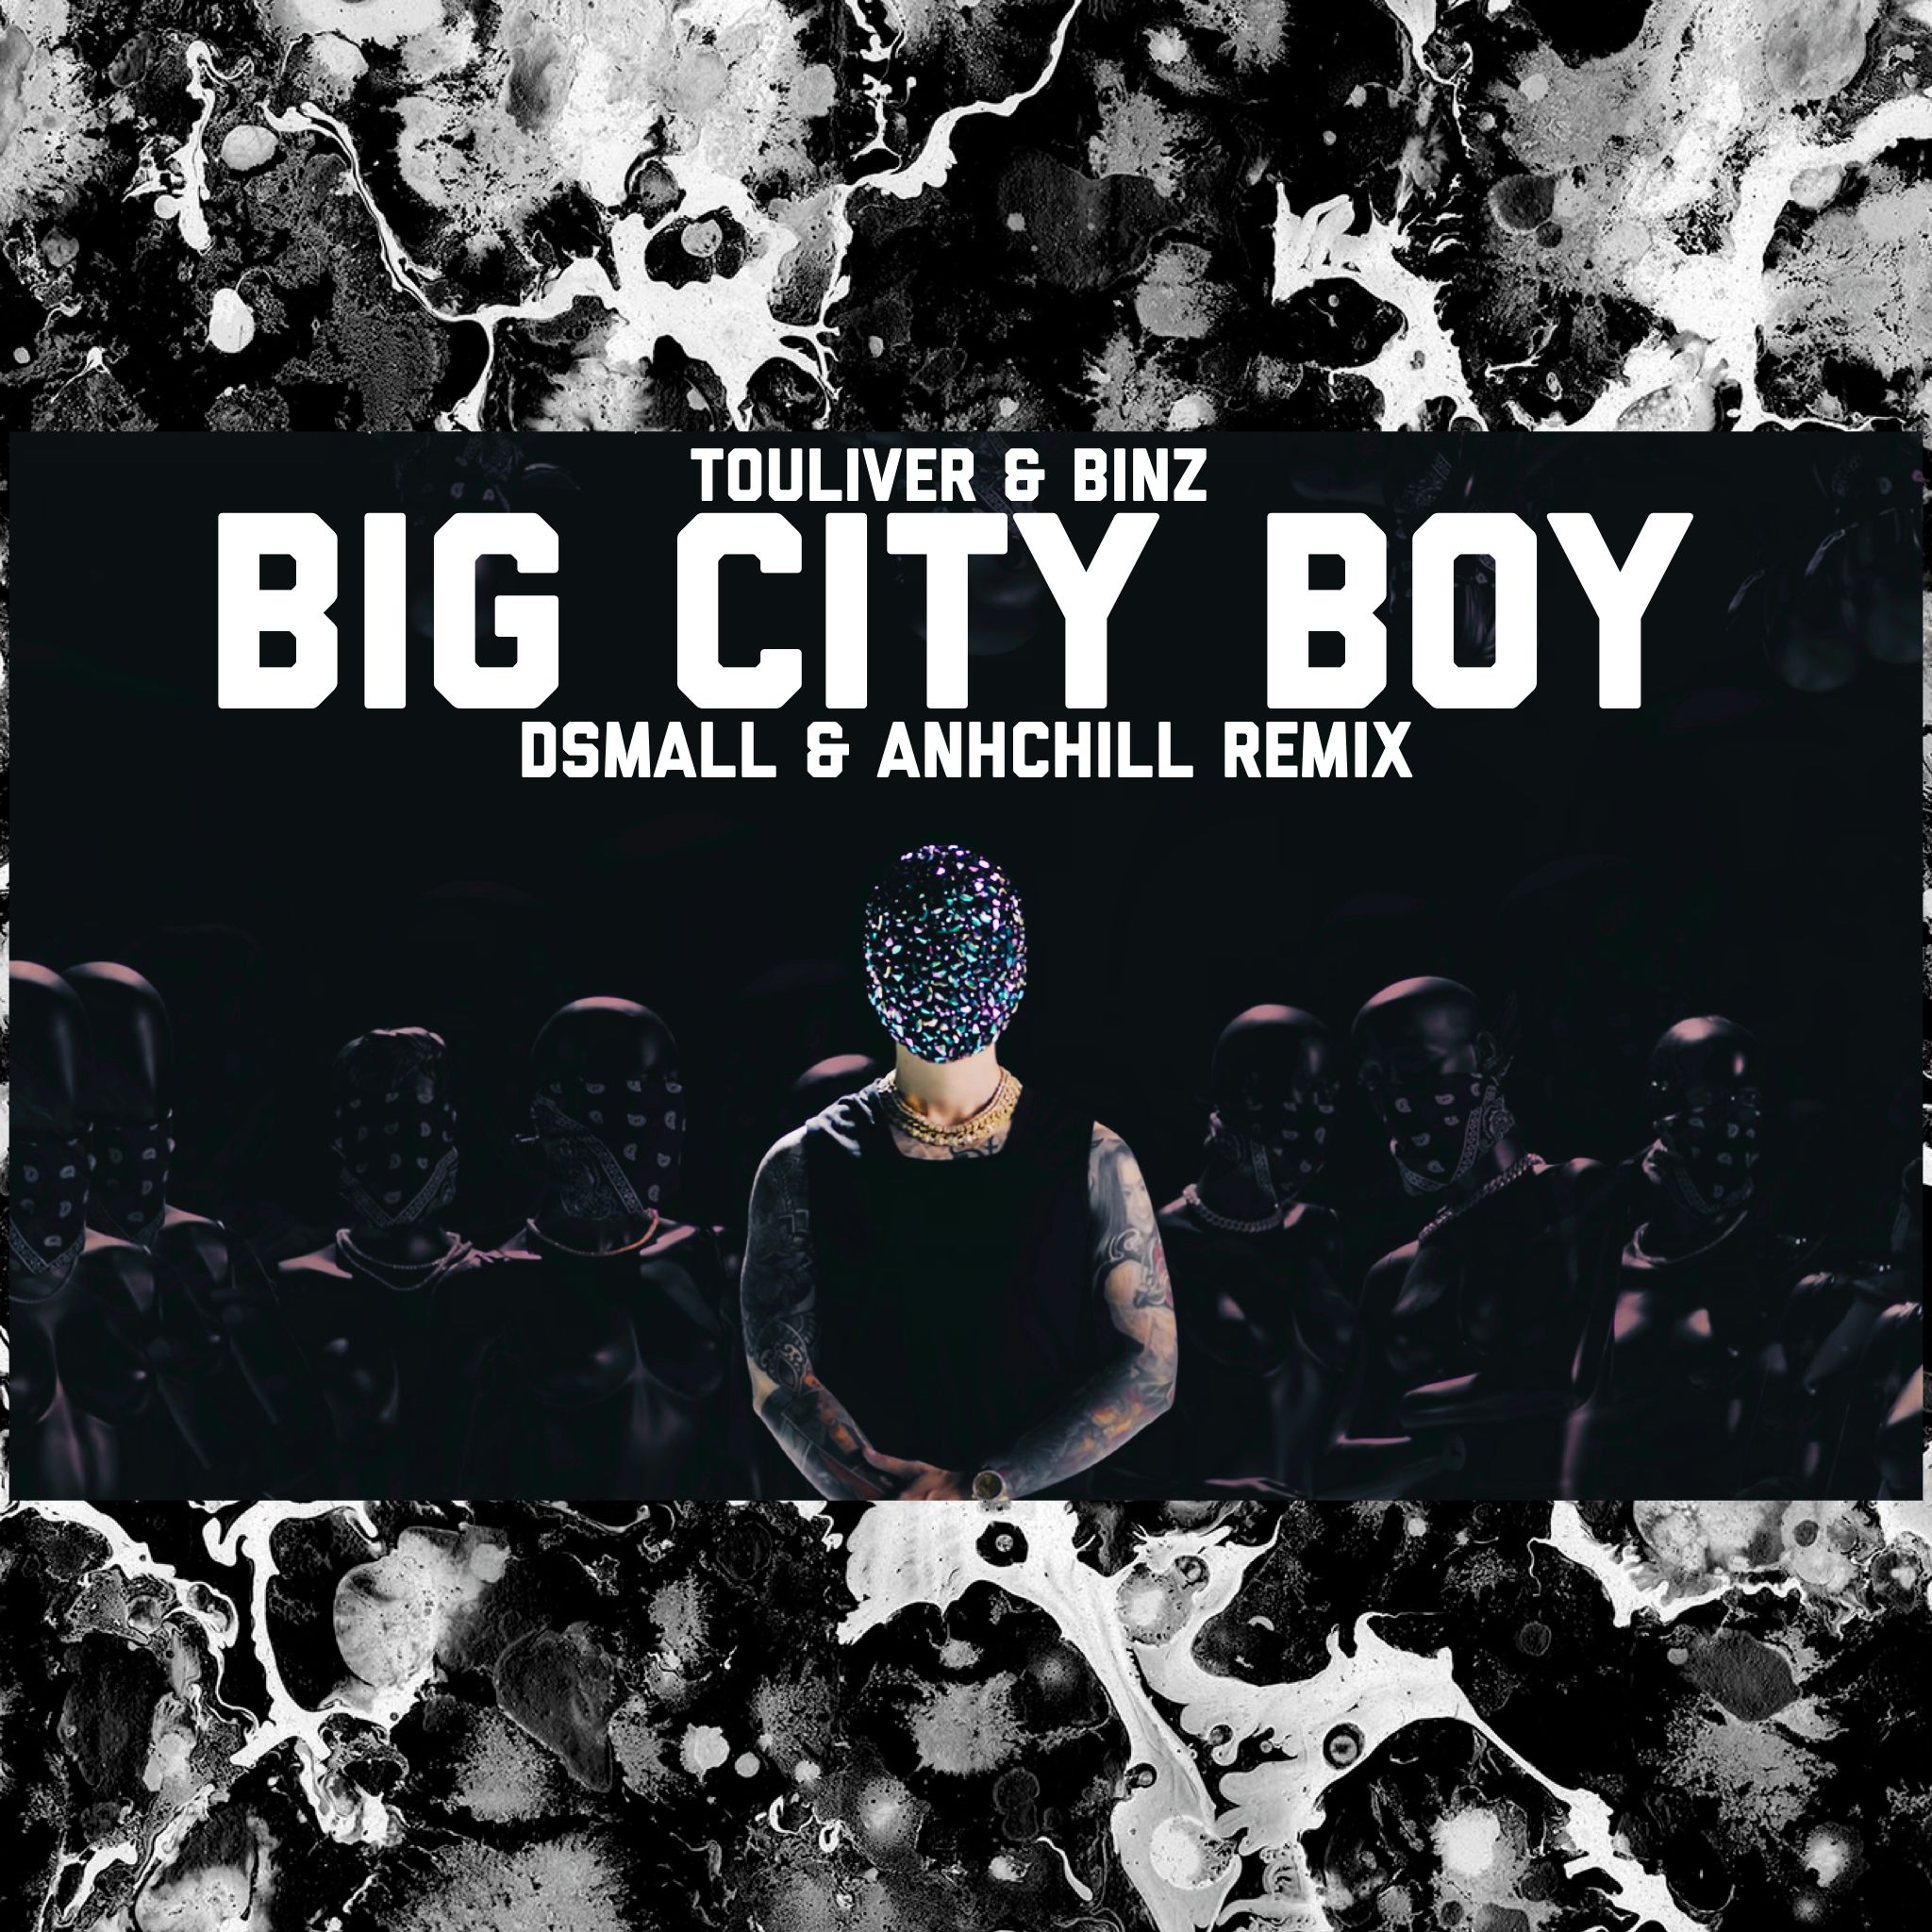 डाउनलोड करा TOULIVER & BINZ - BIG CITY BOY (DSMALL & ANHCHILL REMIX)